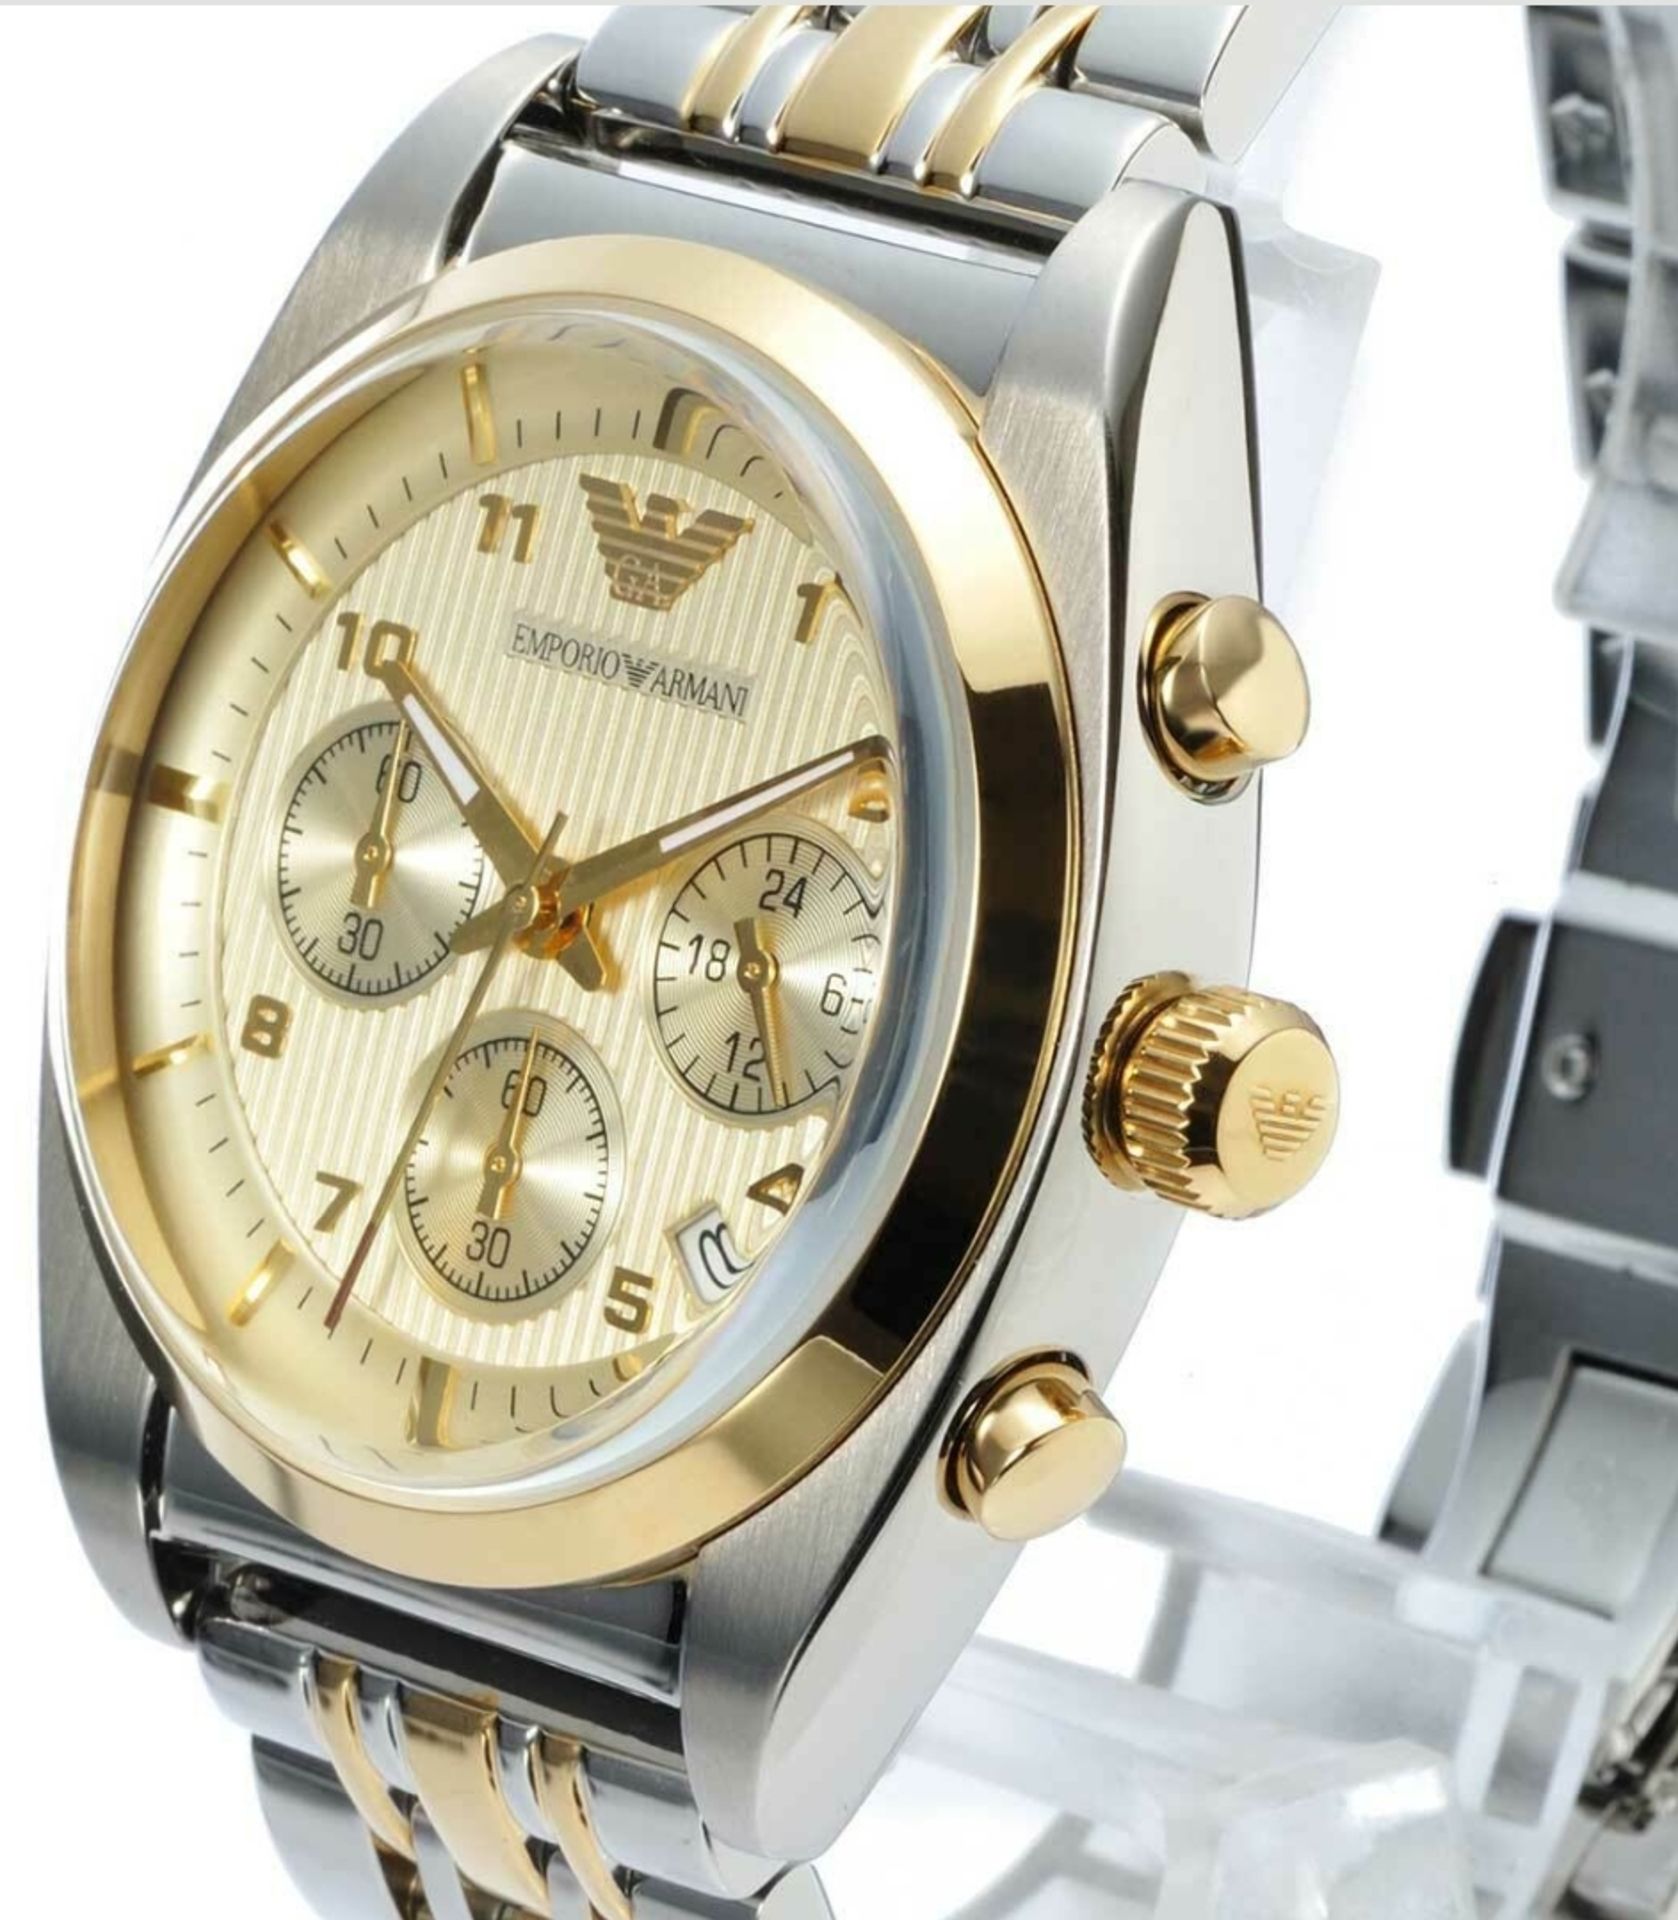 Emporio Armani AR0396 Men's two Tone Gold & Silver Quartz Chronograph Watch - Image 6 of 8